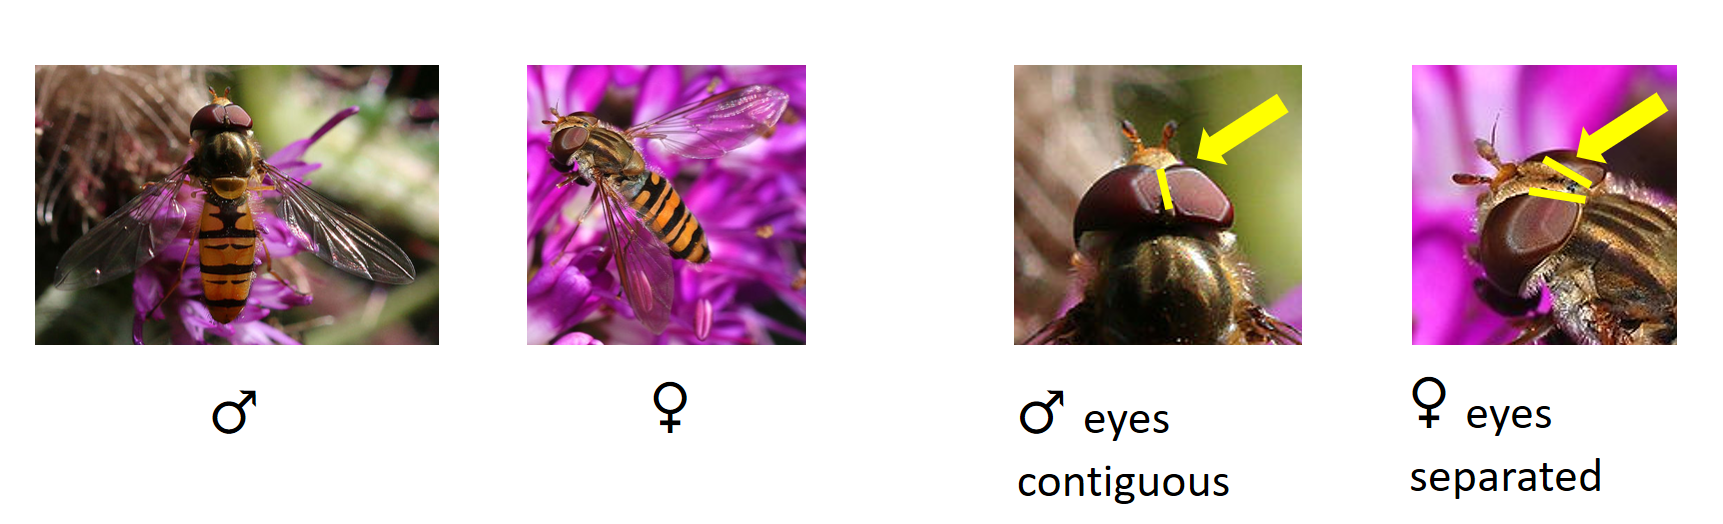 classification of marmelade hoverflies